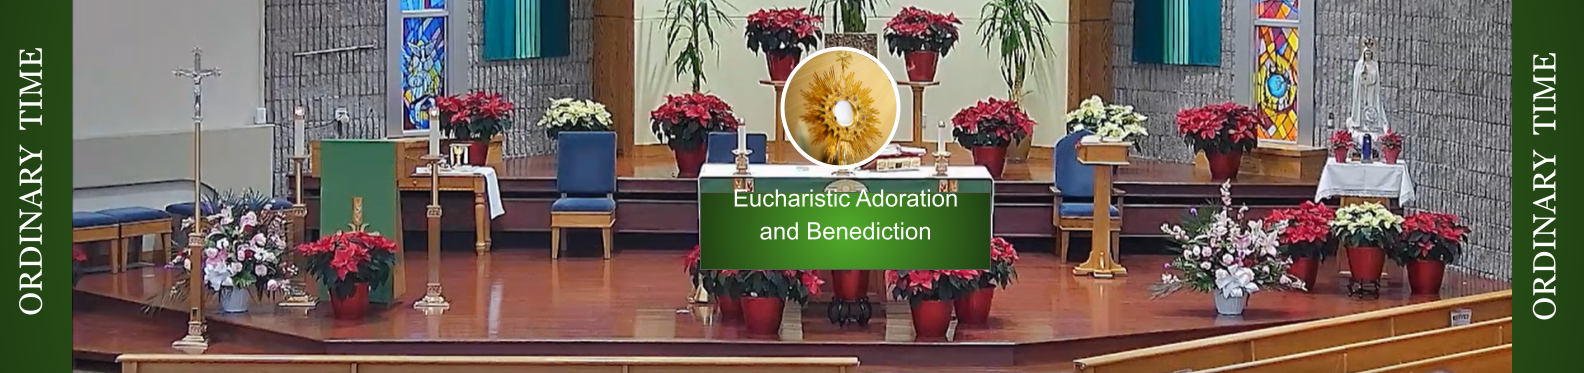 Eucharistic Adoration and Benediction